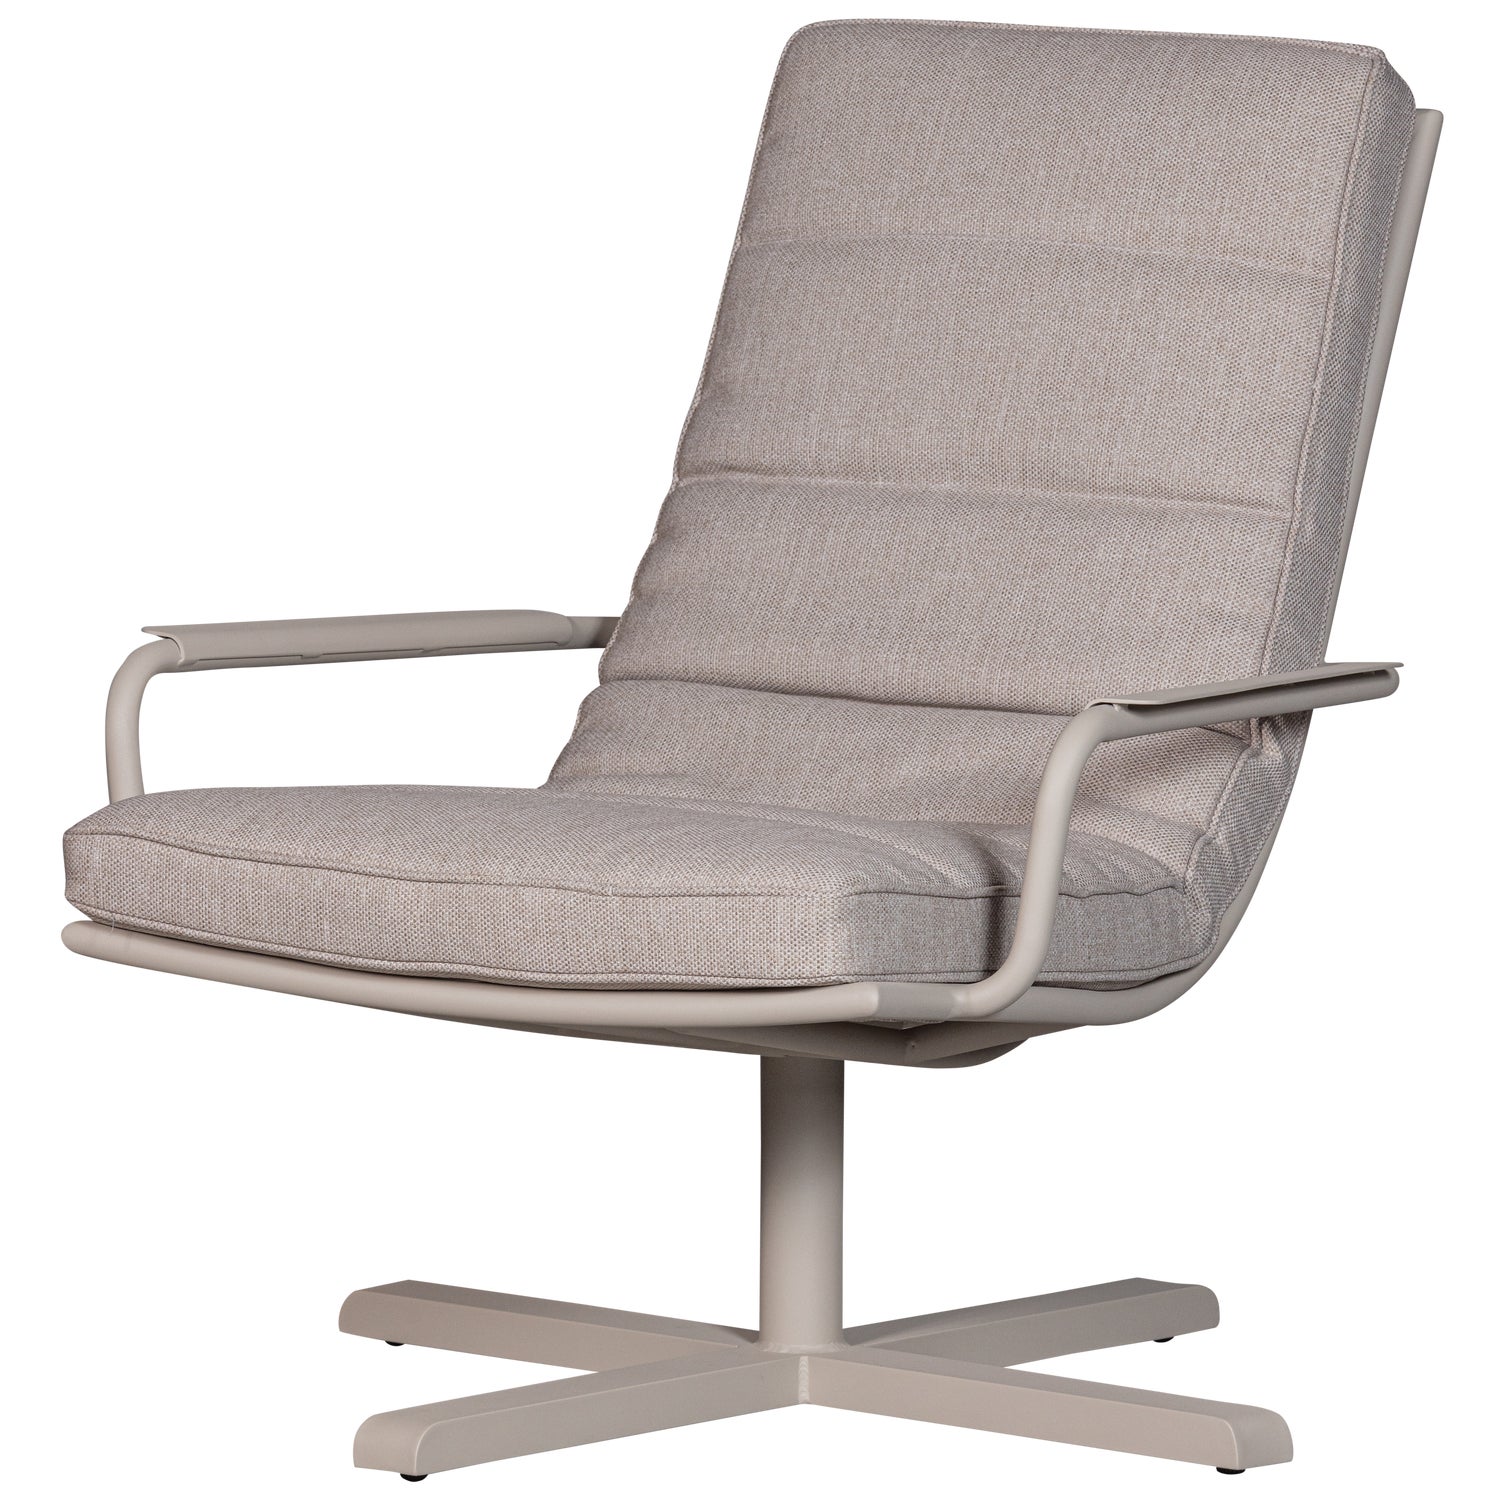 500009-Z-02_VS_EXT_Coosa_fauteuil_alluminium_zand_SA.png?auto=webp&format=png&width=1500&height=1500